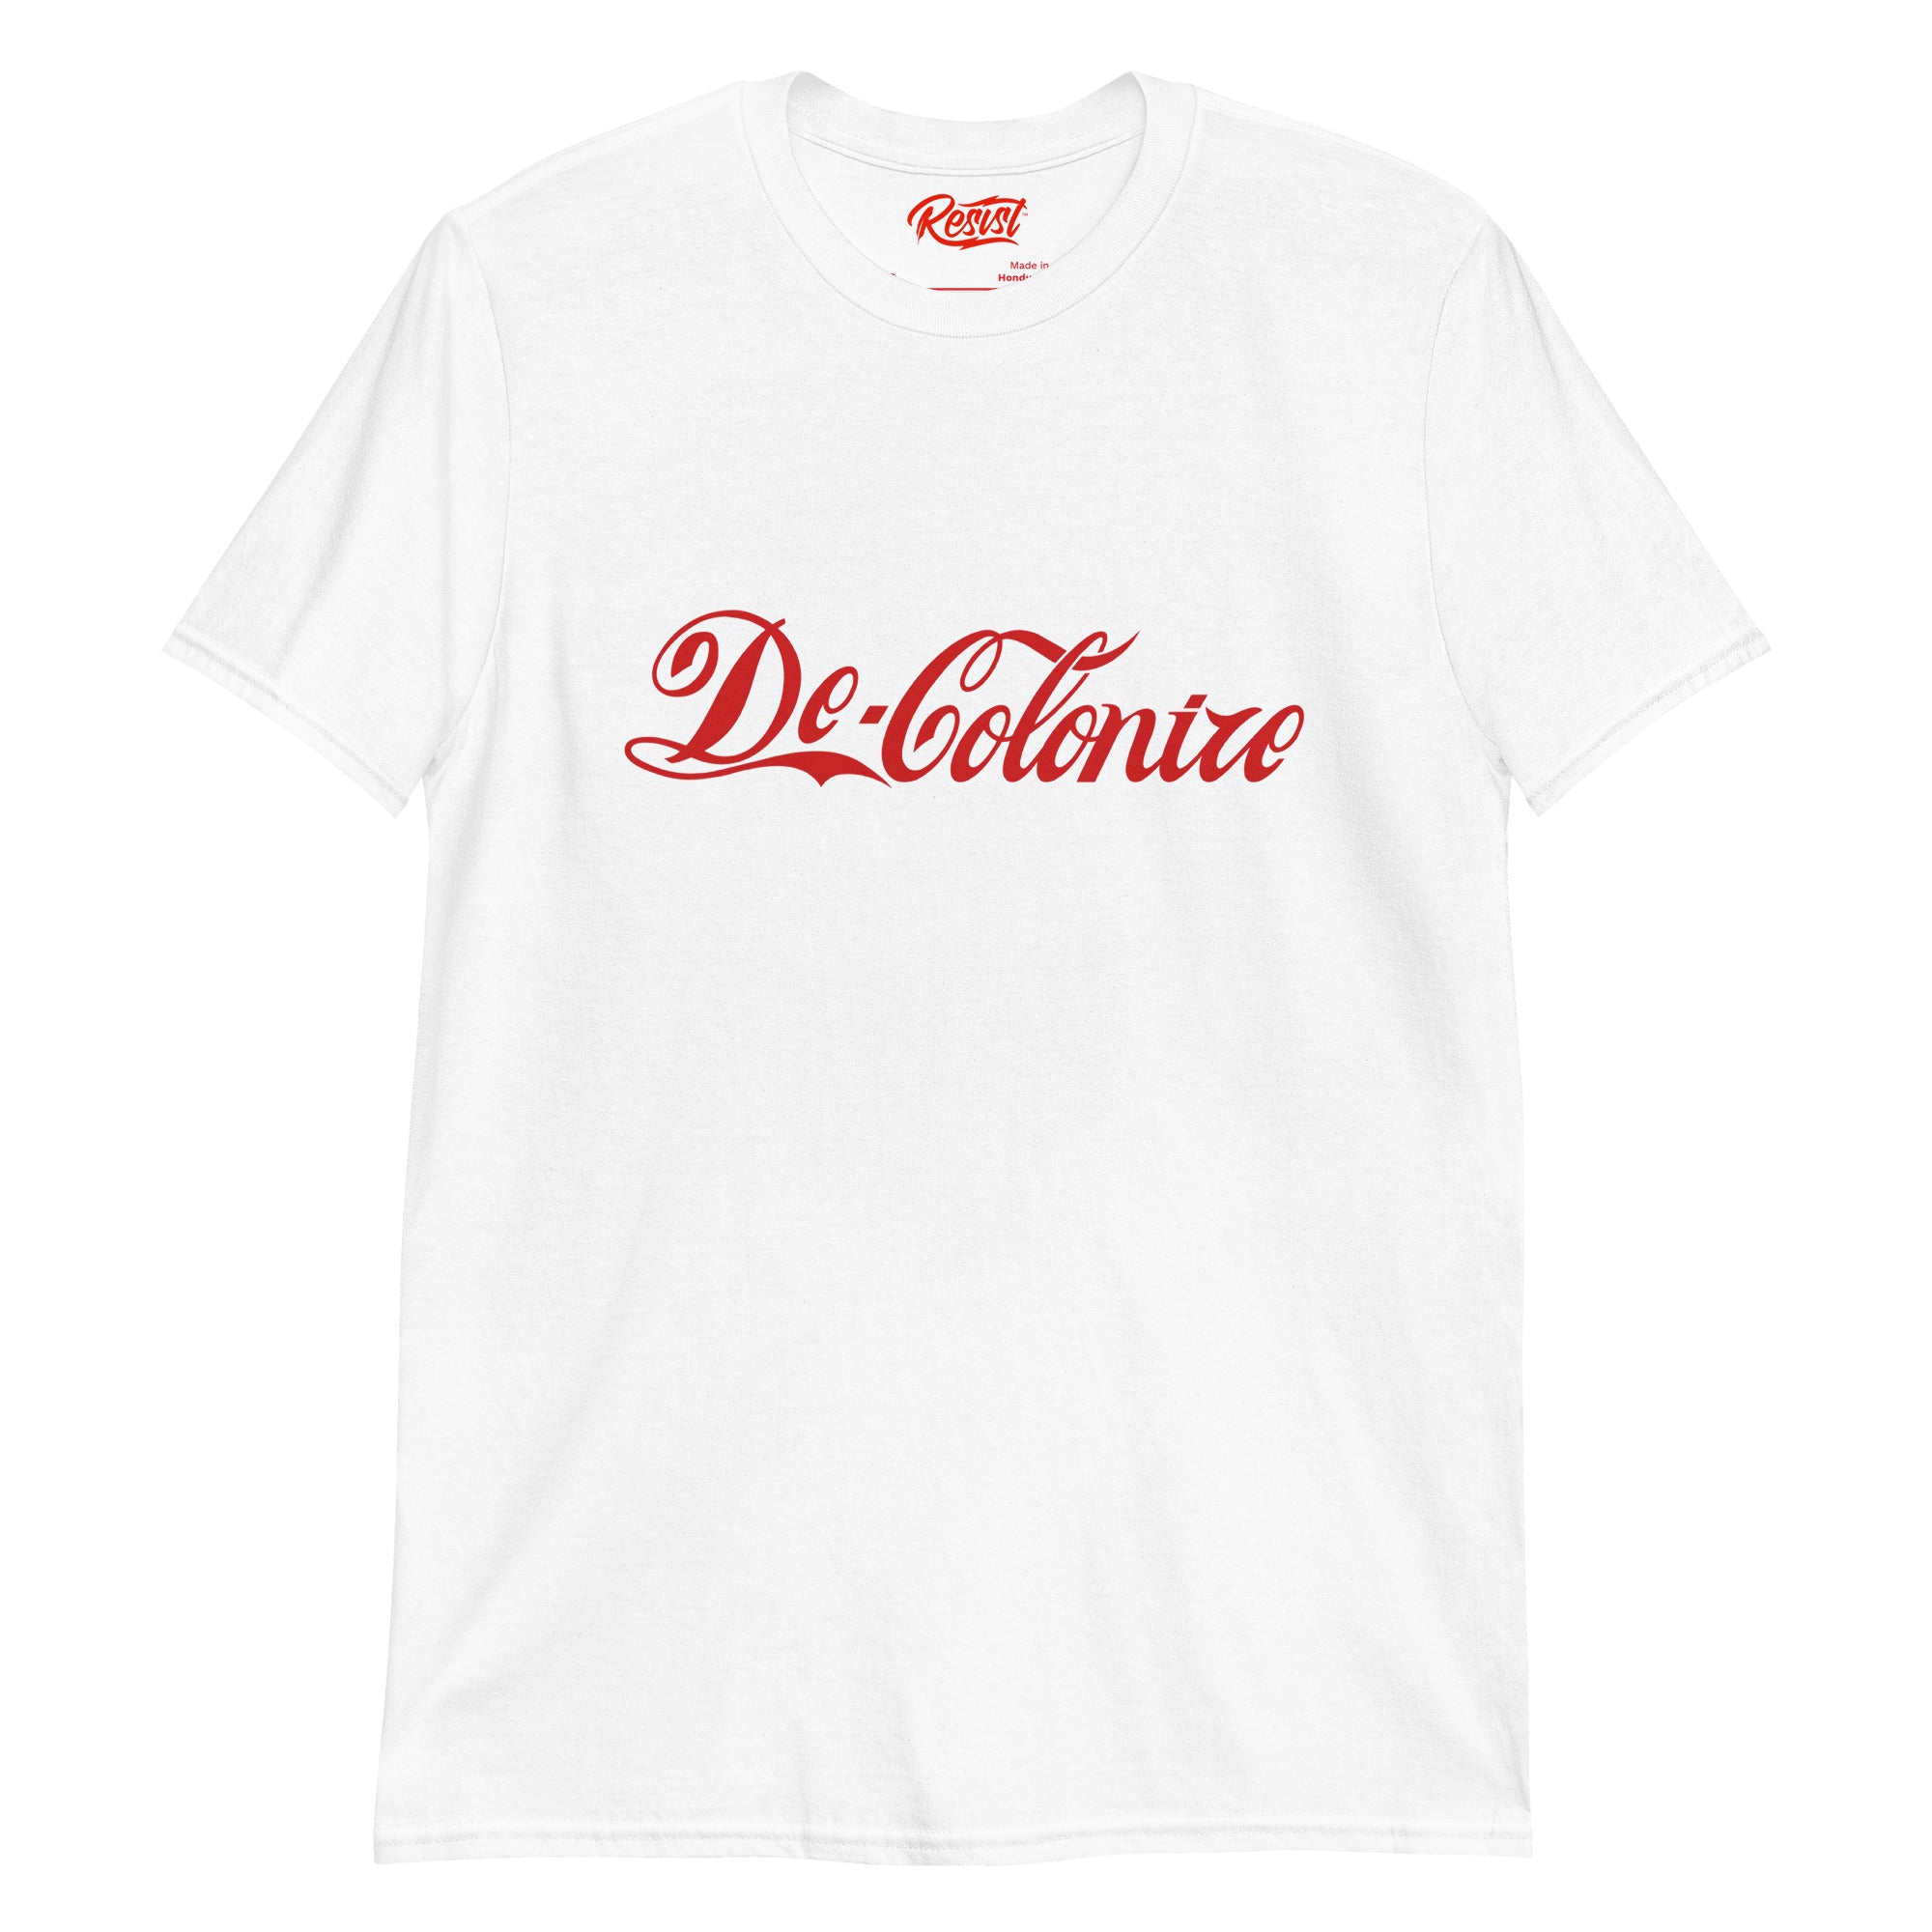 De-cola-nize T-shirt